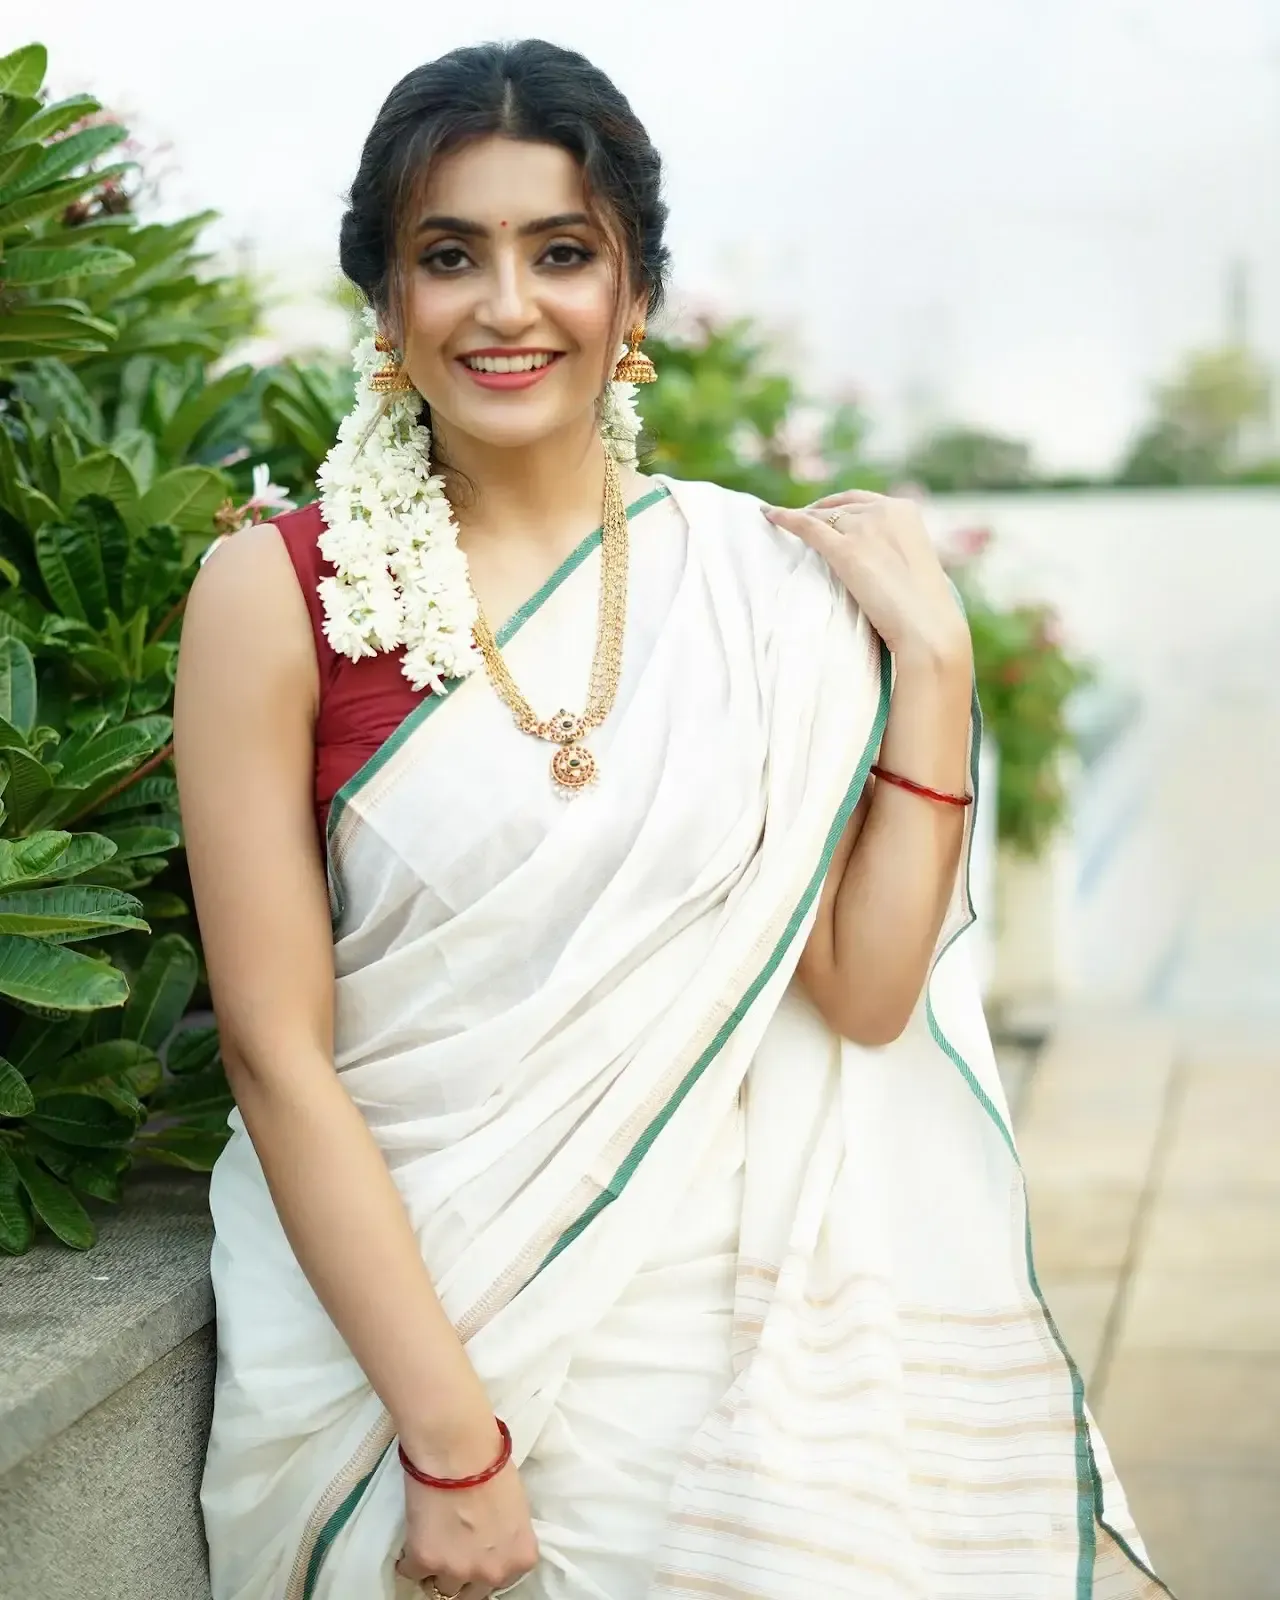 Malayalam Actress Avantika Mishra Images in White Saree